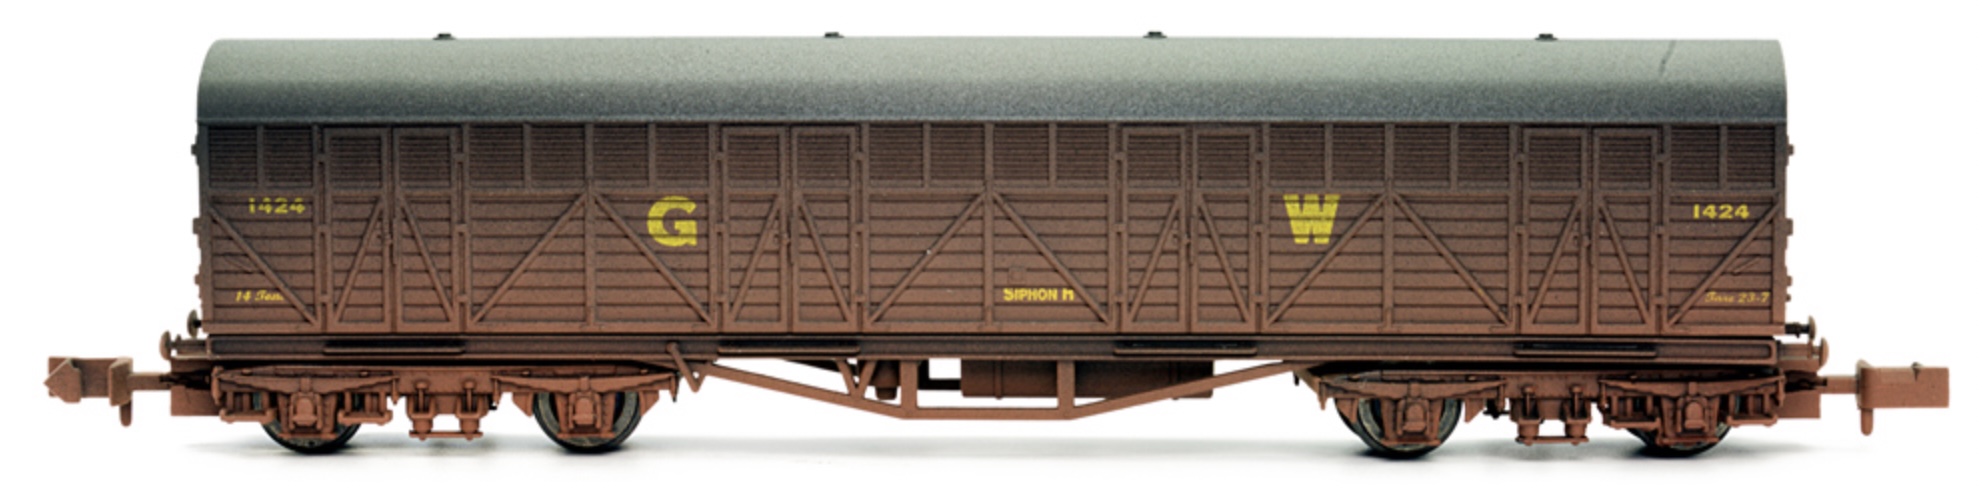 N Scale - Dapol - 2F-023-006 - Siphon Wagon, Wood, H-Series - Great Western - 1430